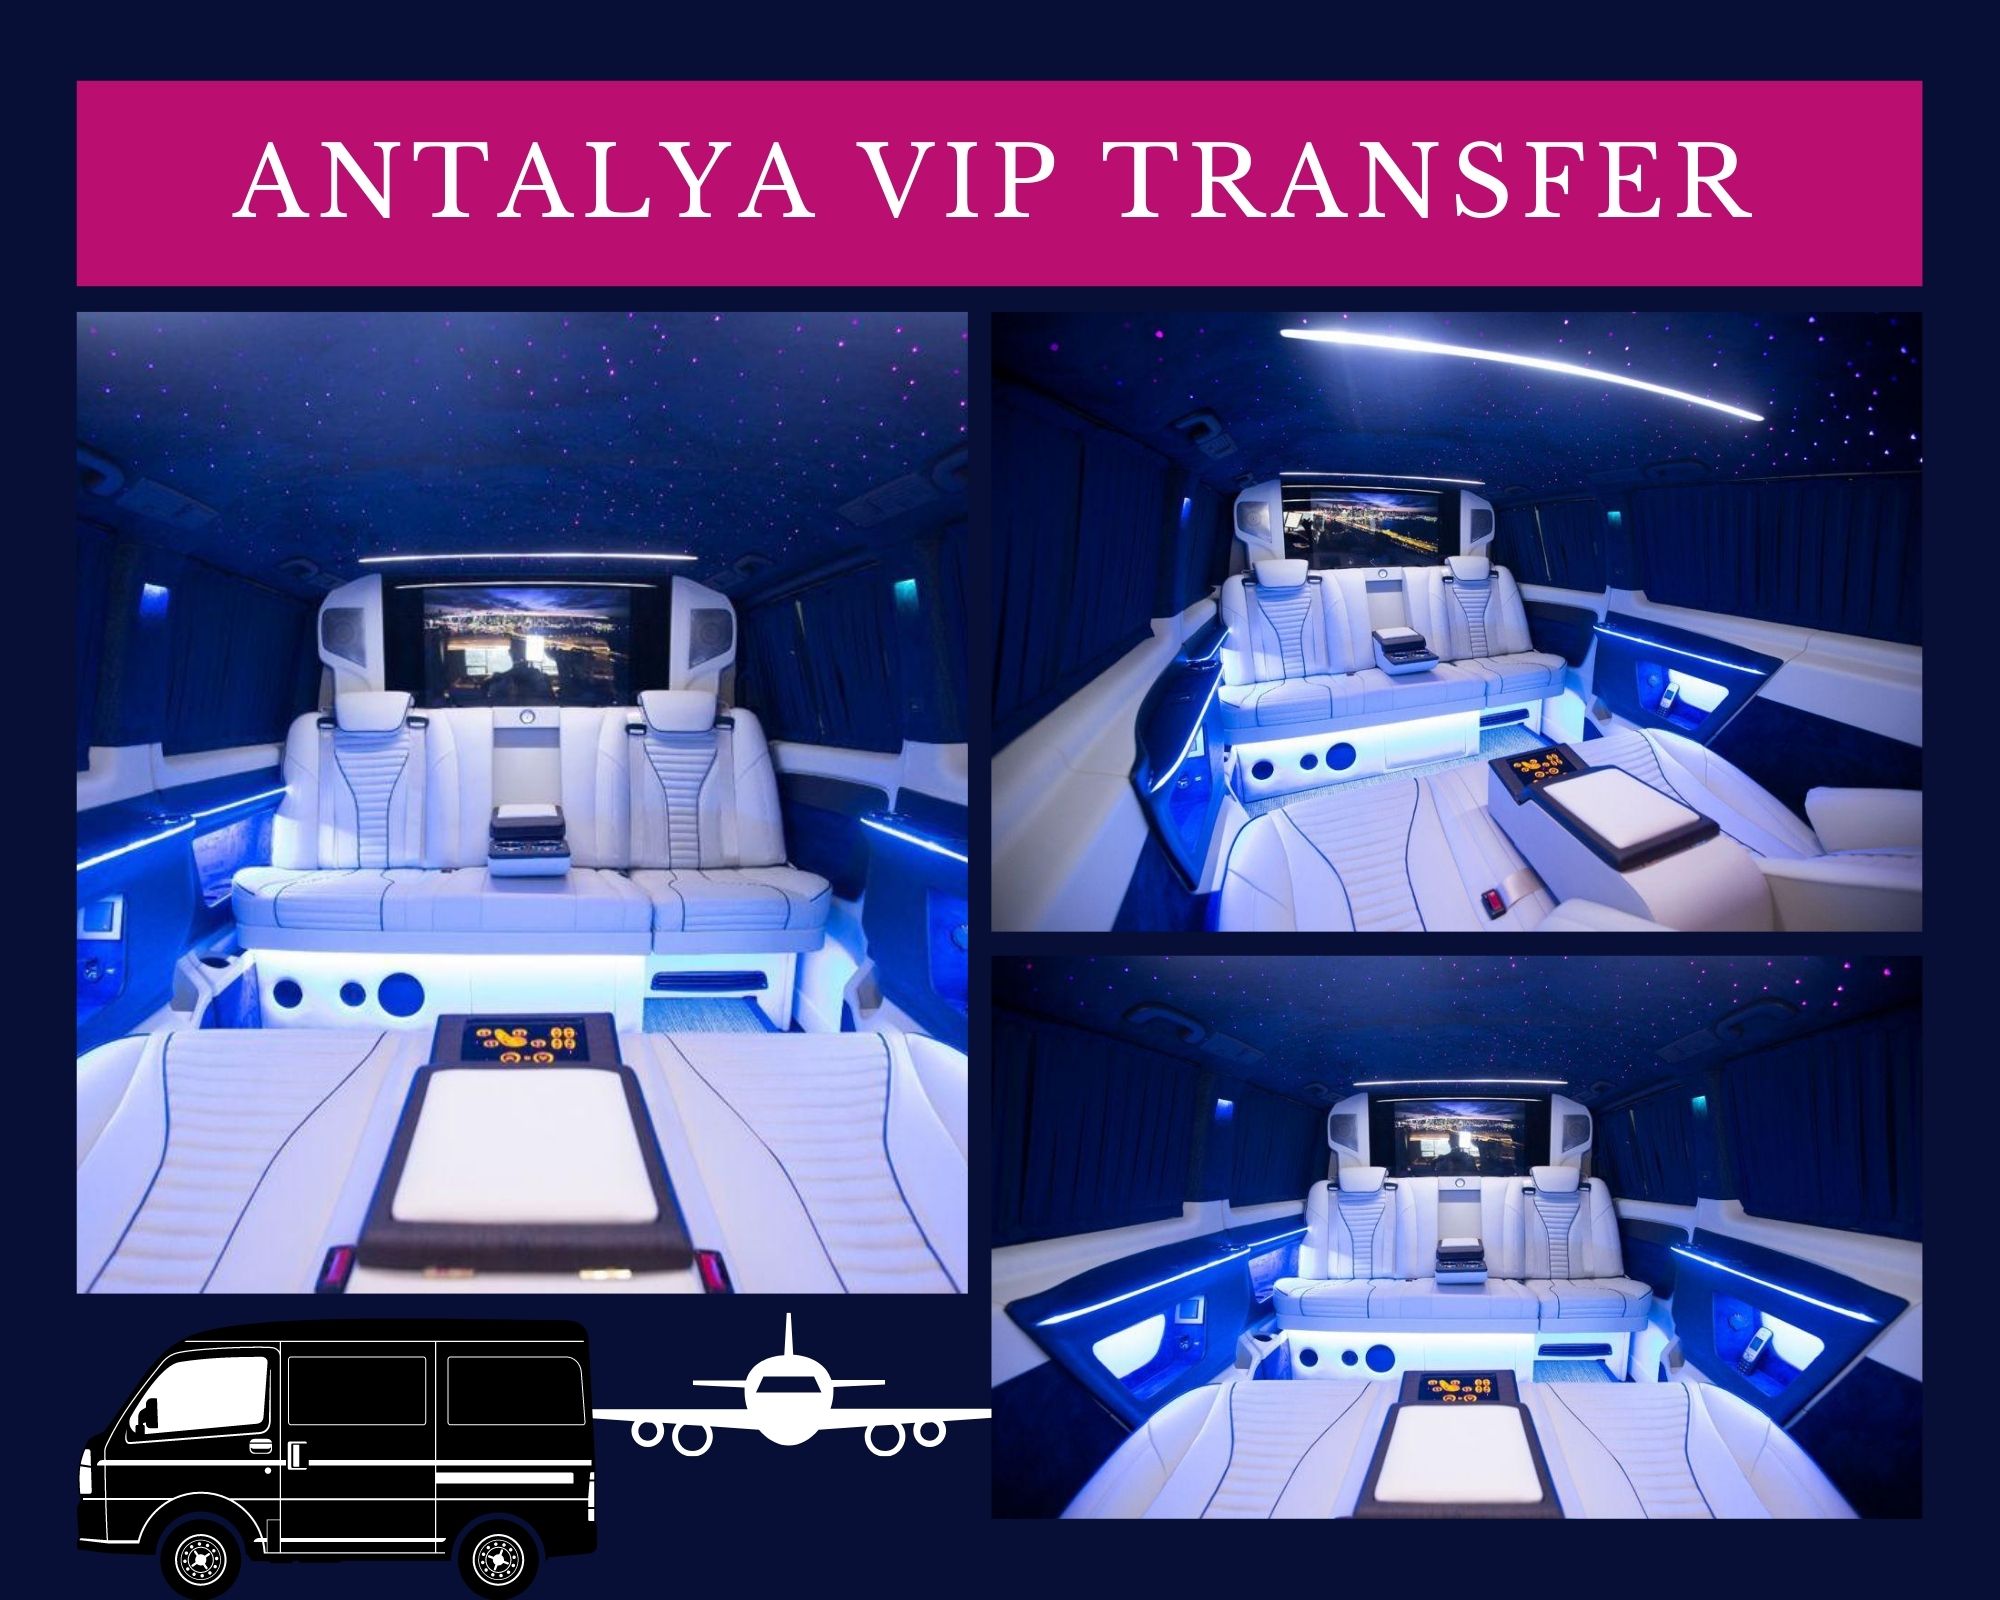 Antalya VIP Transfer